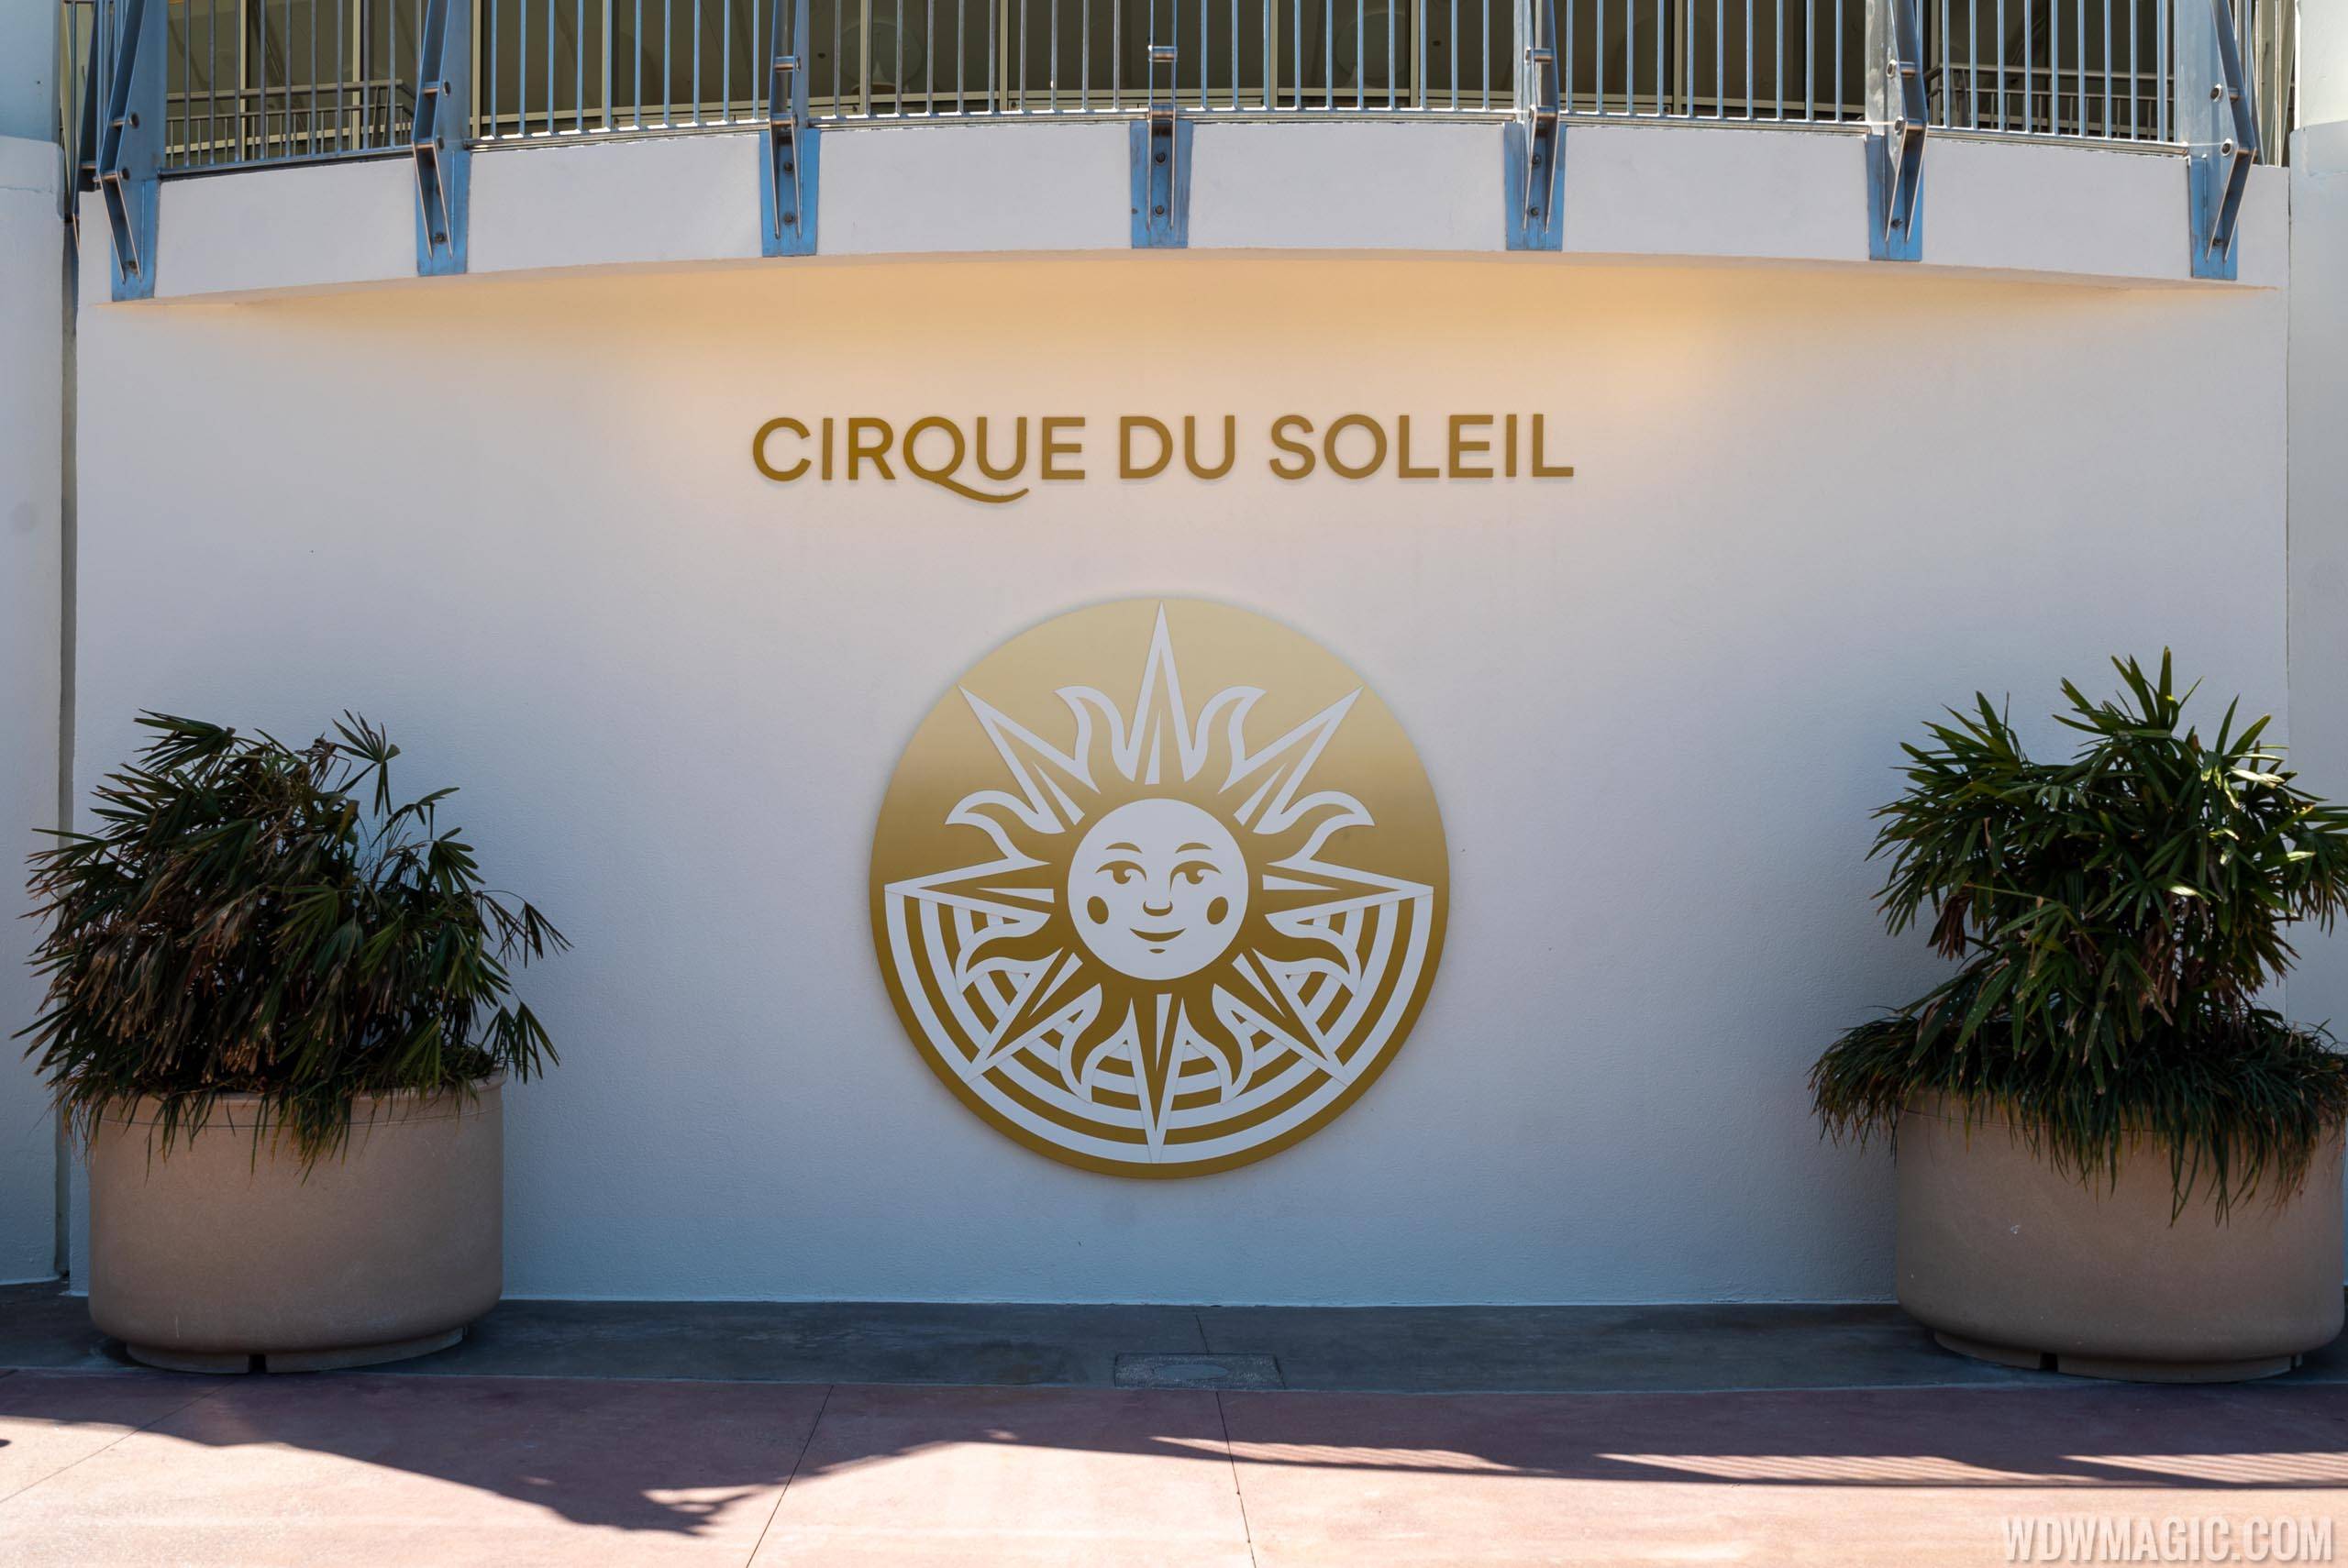 New Cirque du Soleil sign on building exterior